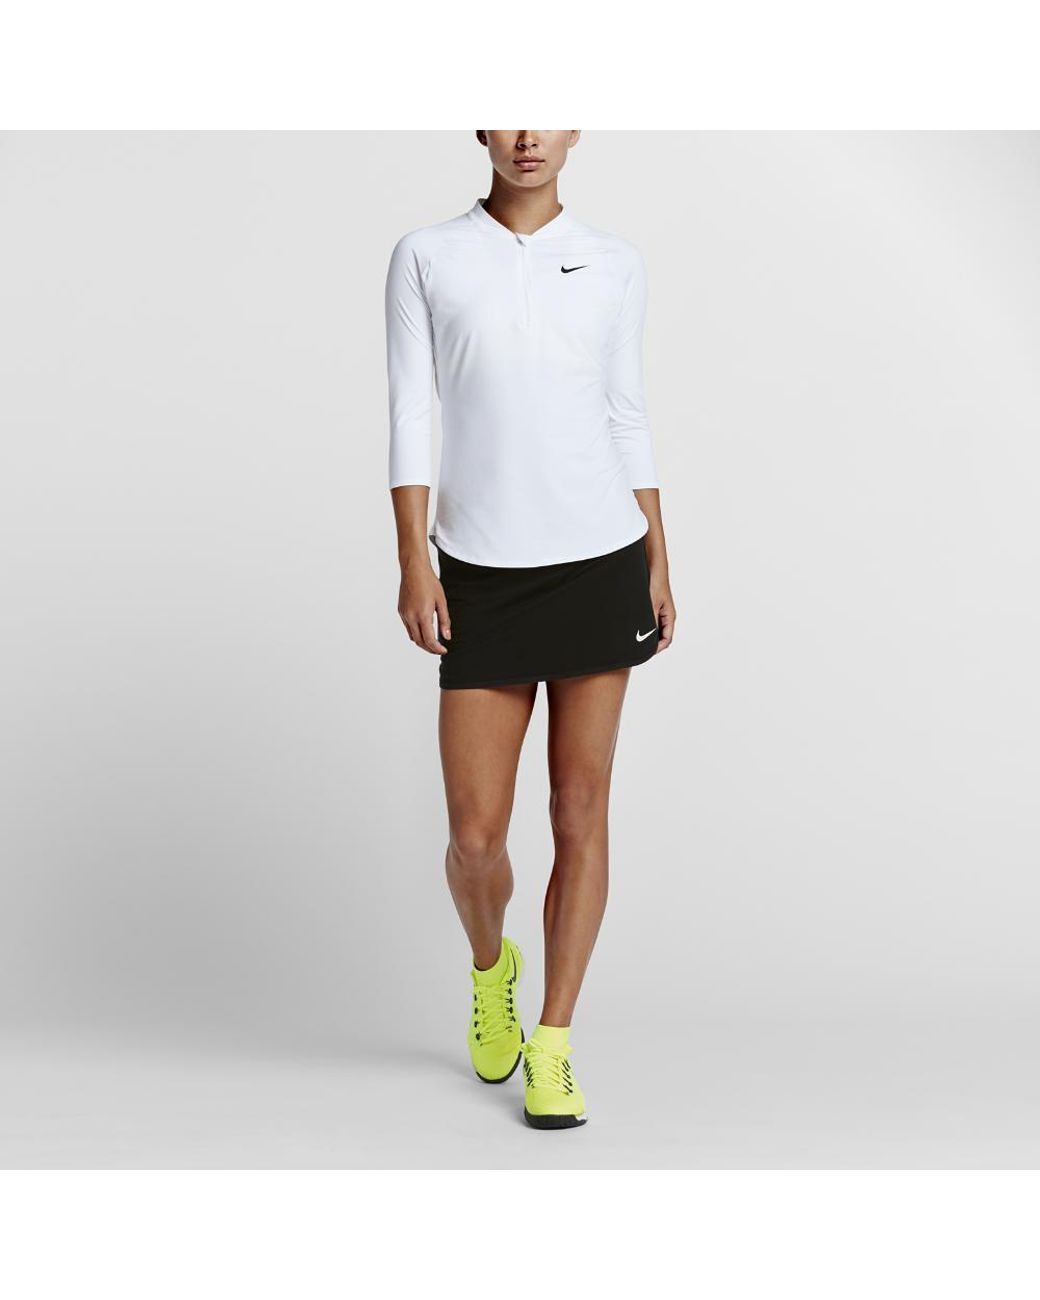 NWT NikeCourt Dri-FIT Advantage Women's Tennis Tank Top Shirt